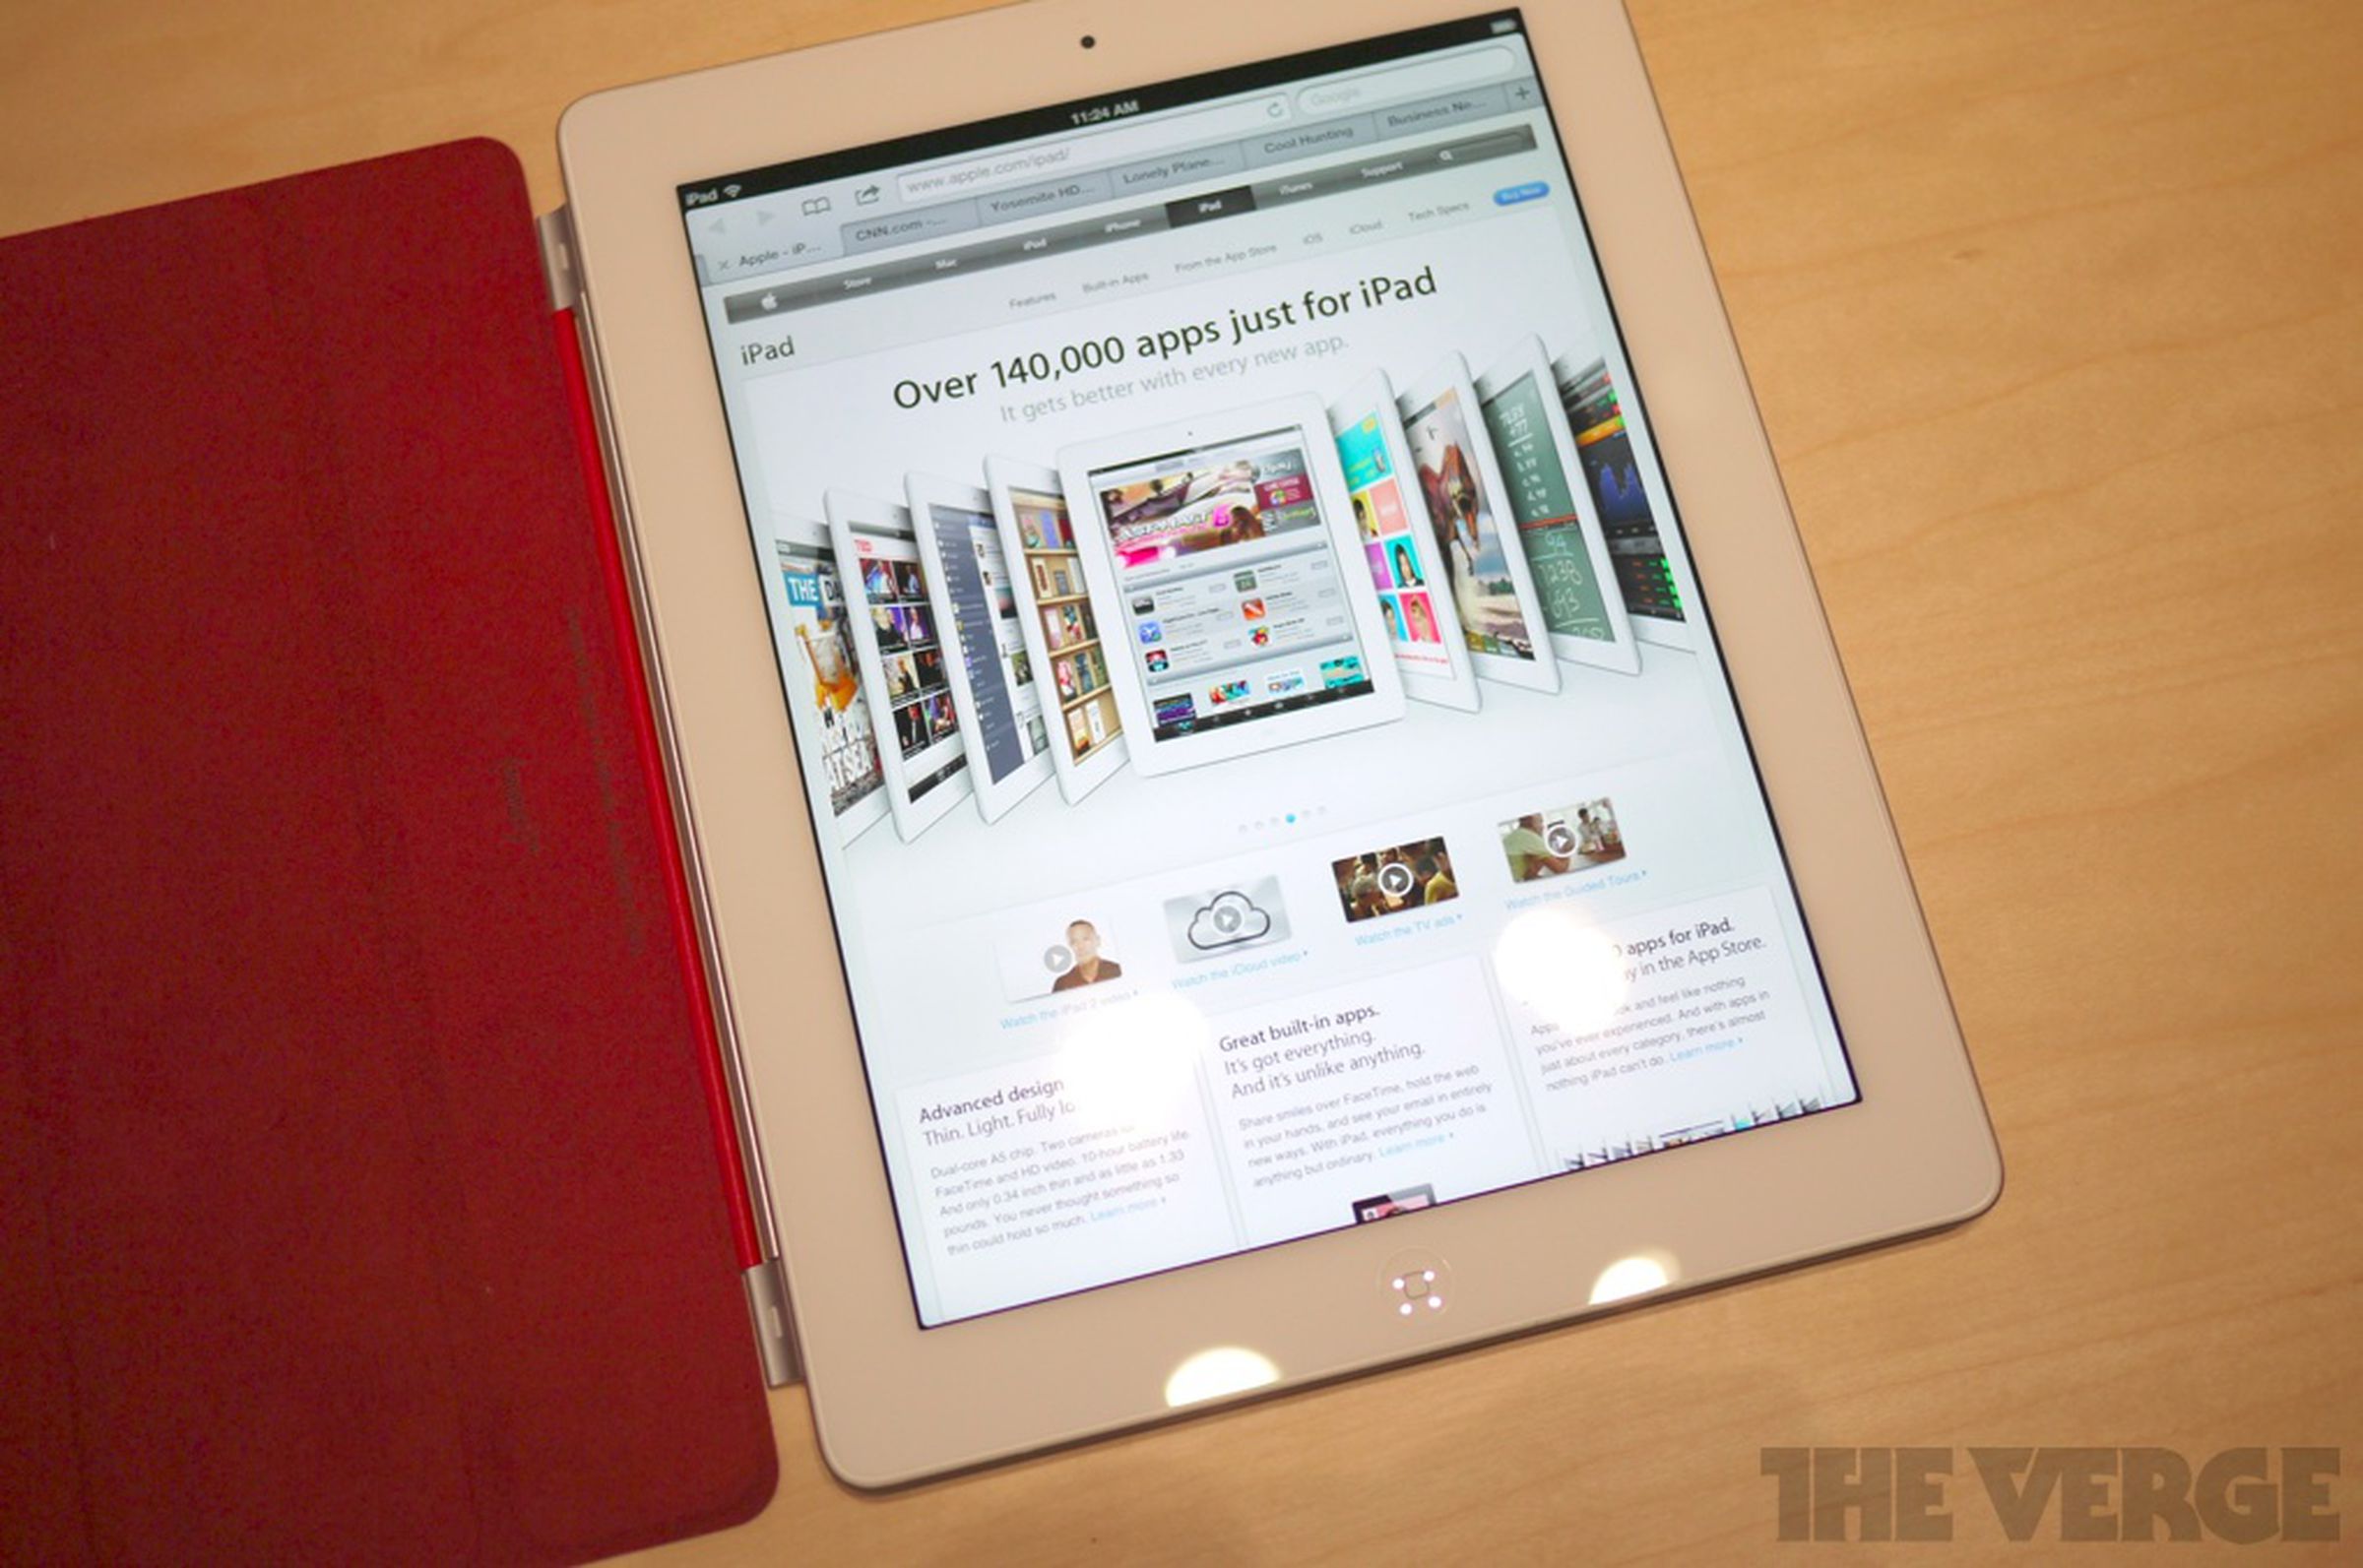 New iPad hands-on photos